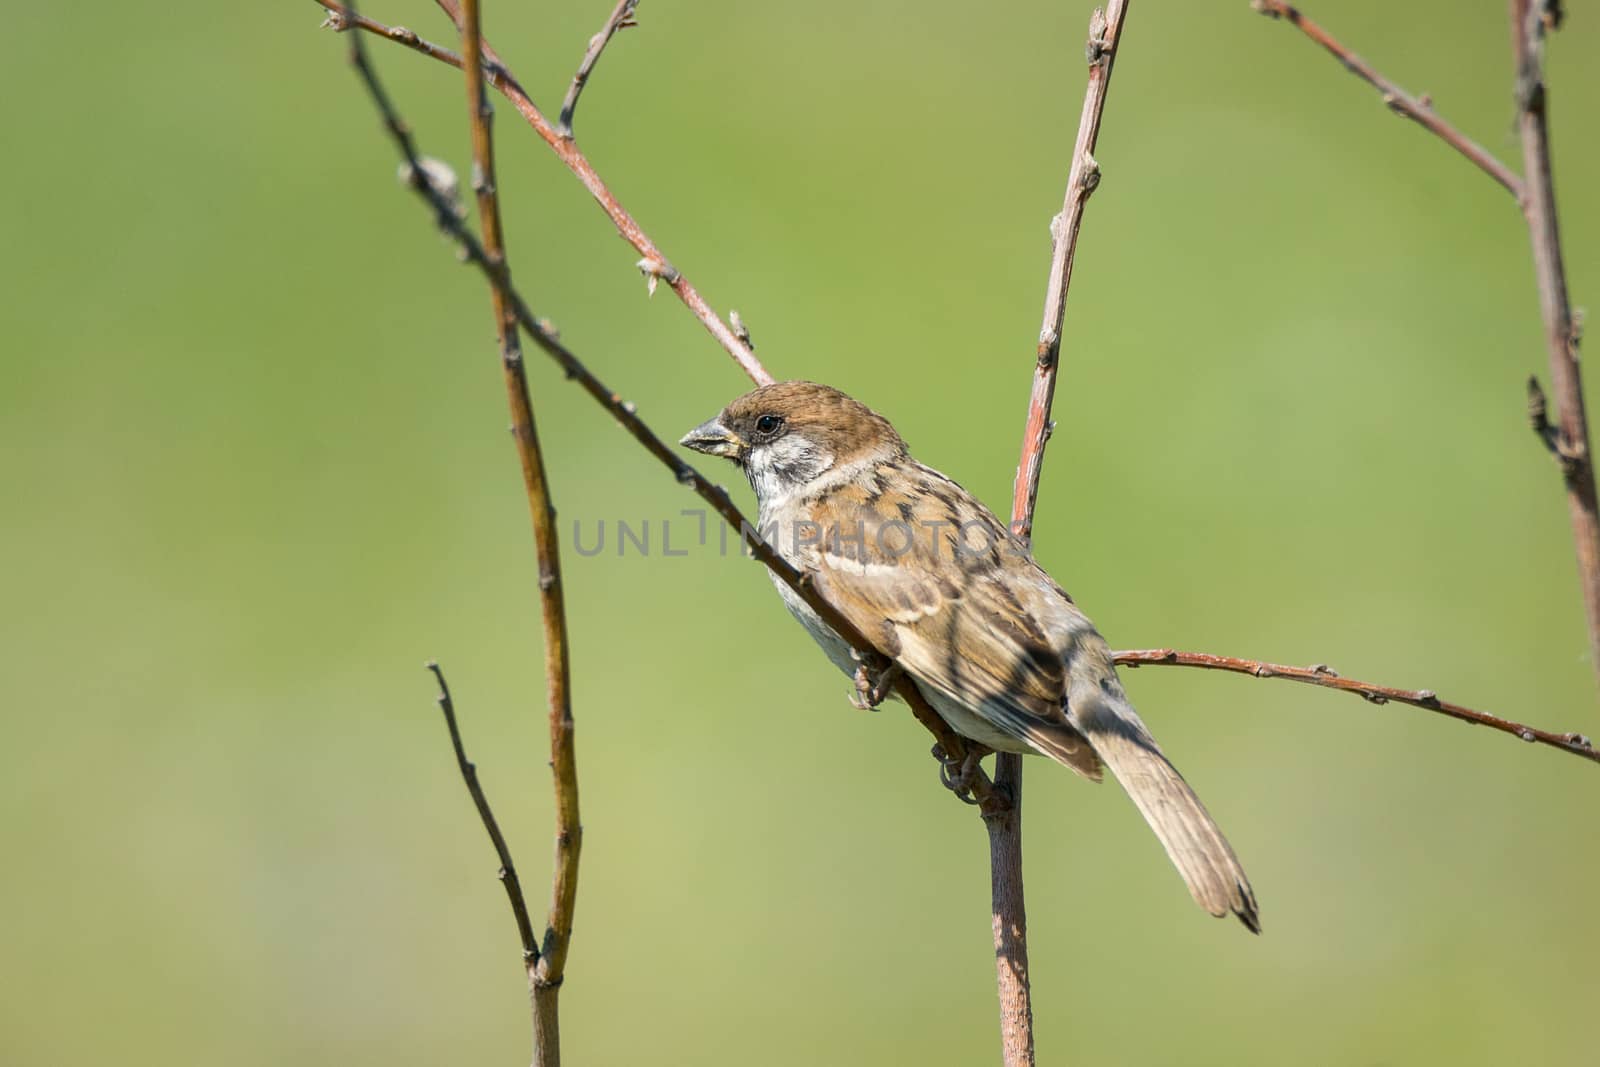 Sparrow on a branch by AlexBush